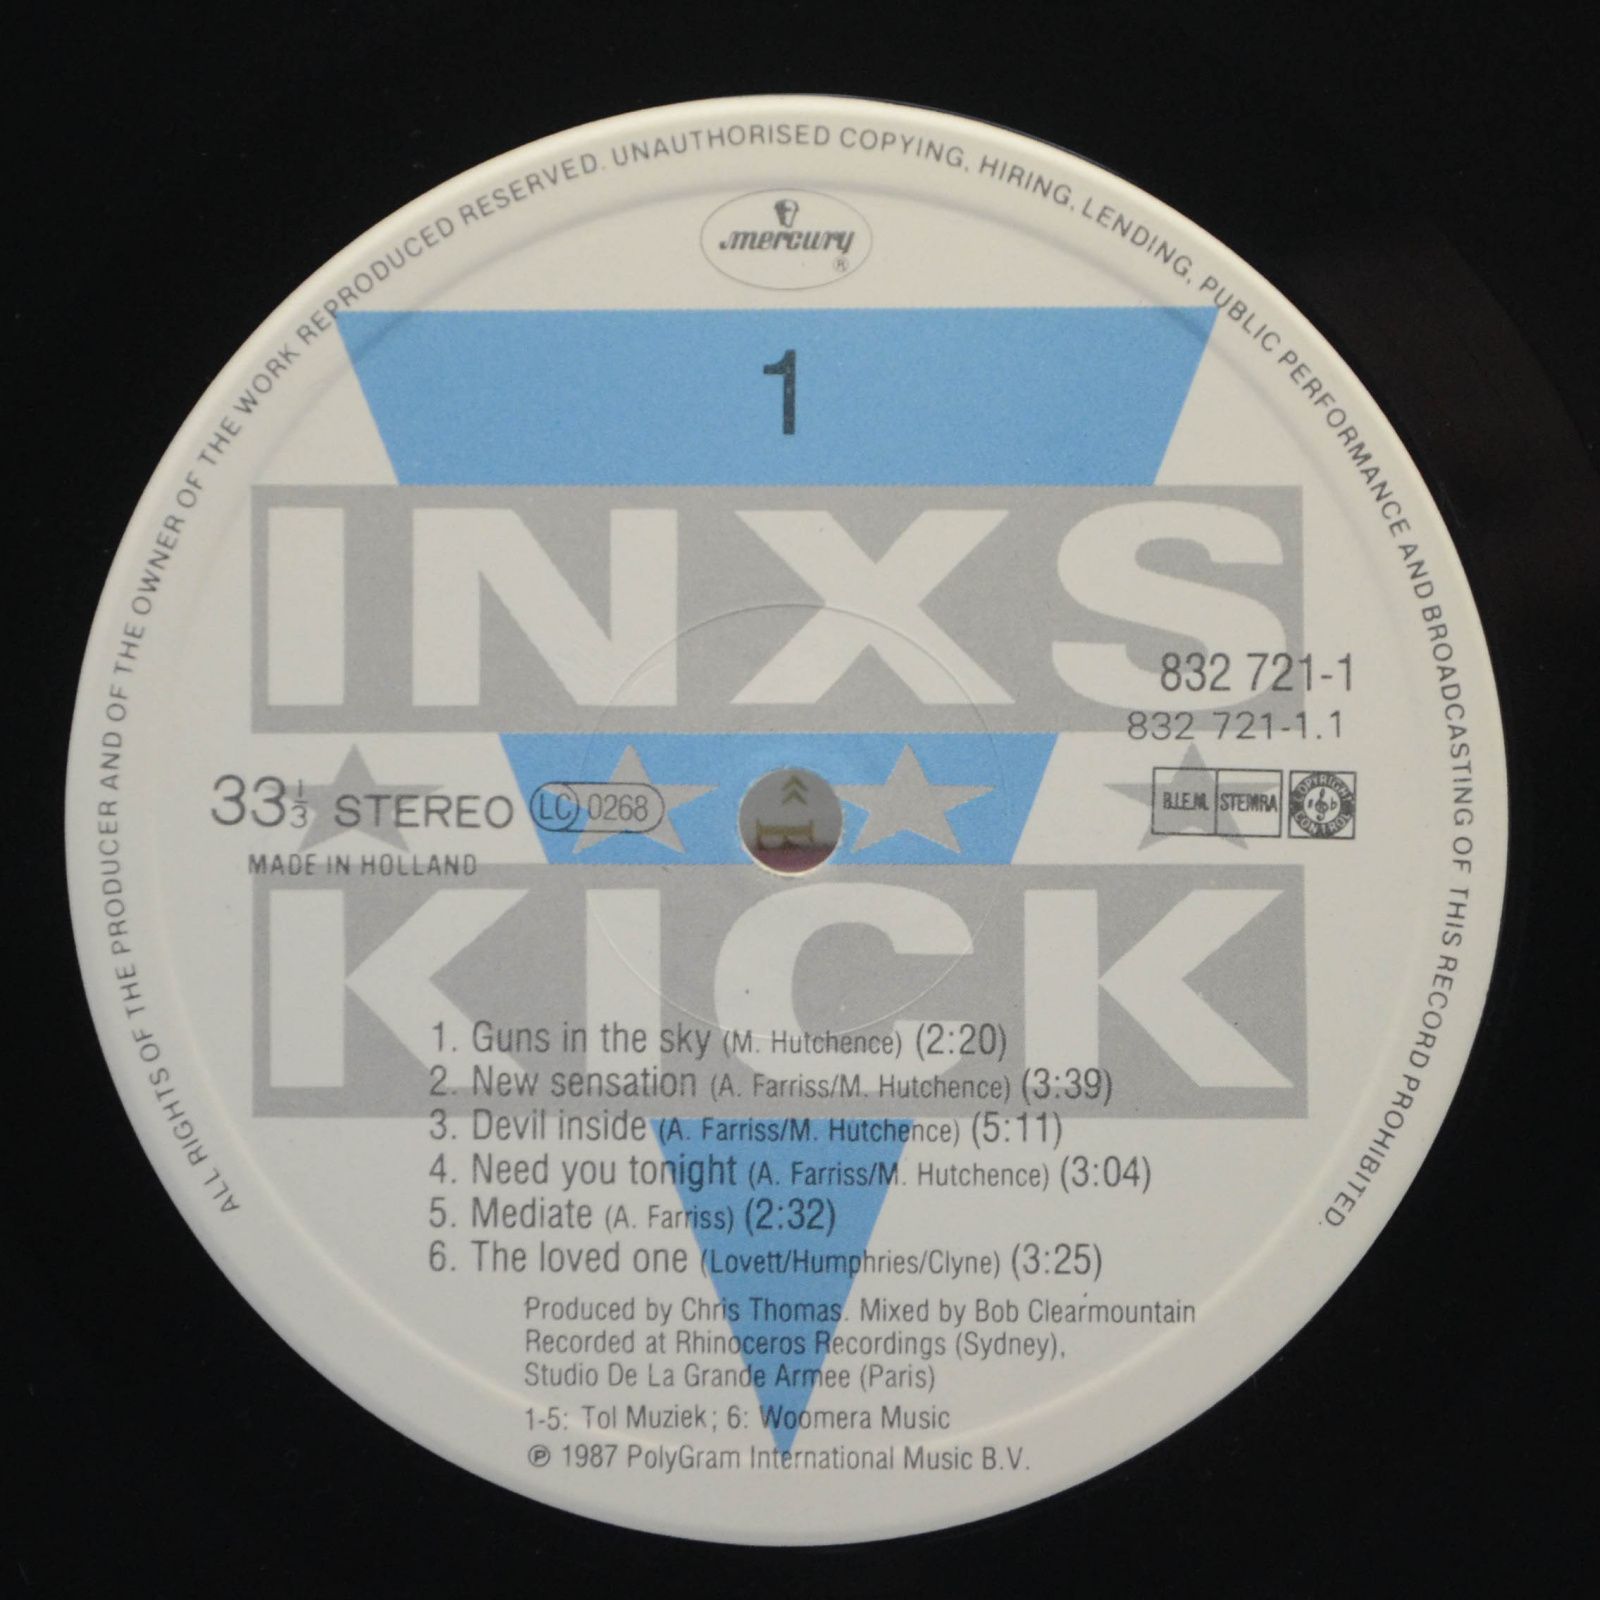 INXS — Kick, 1987